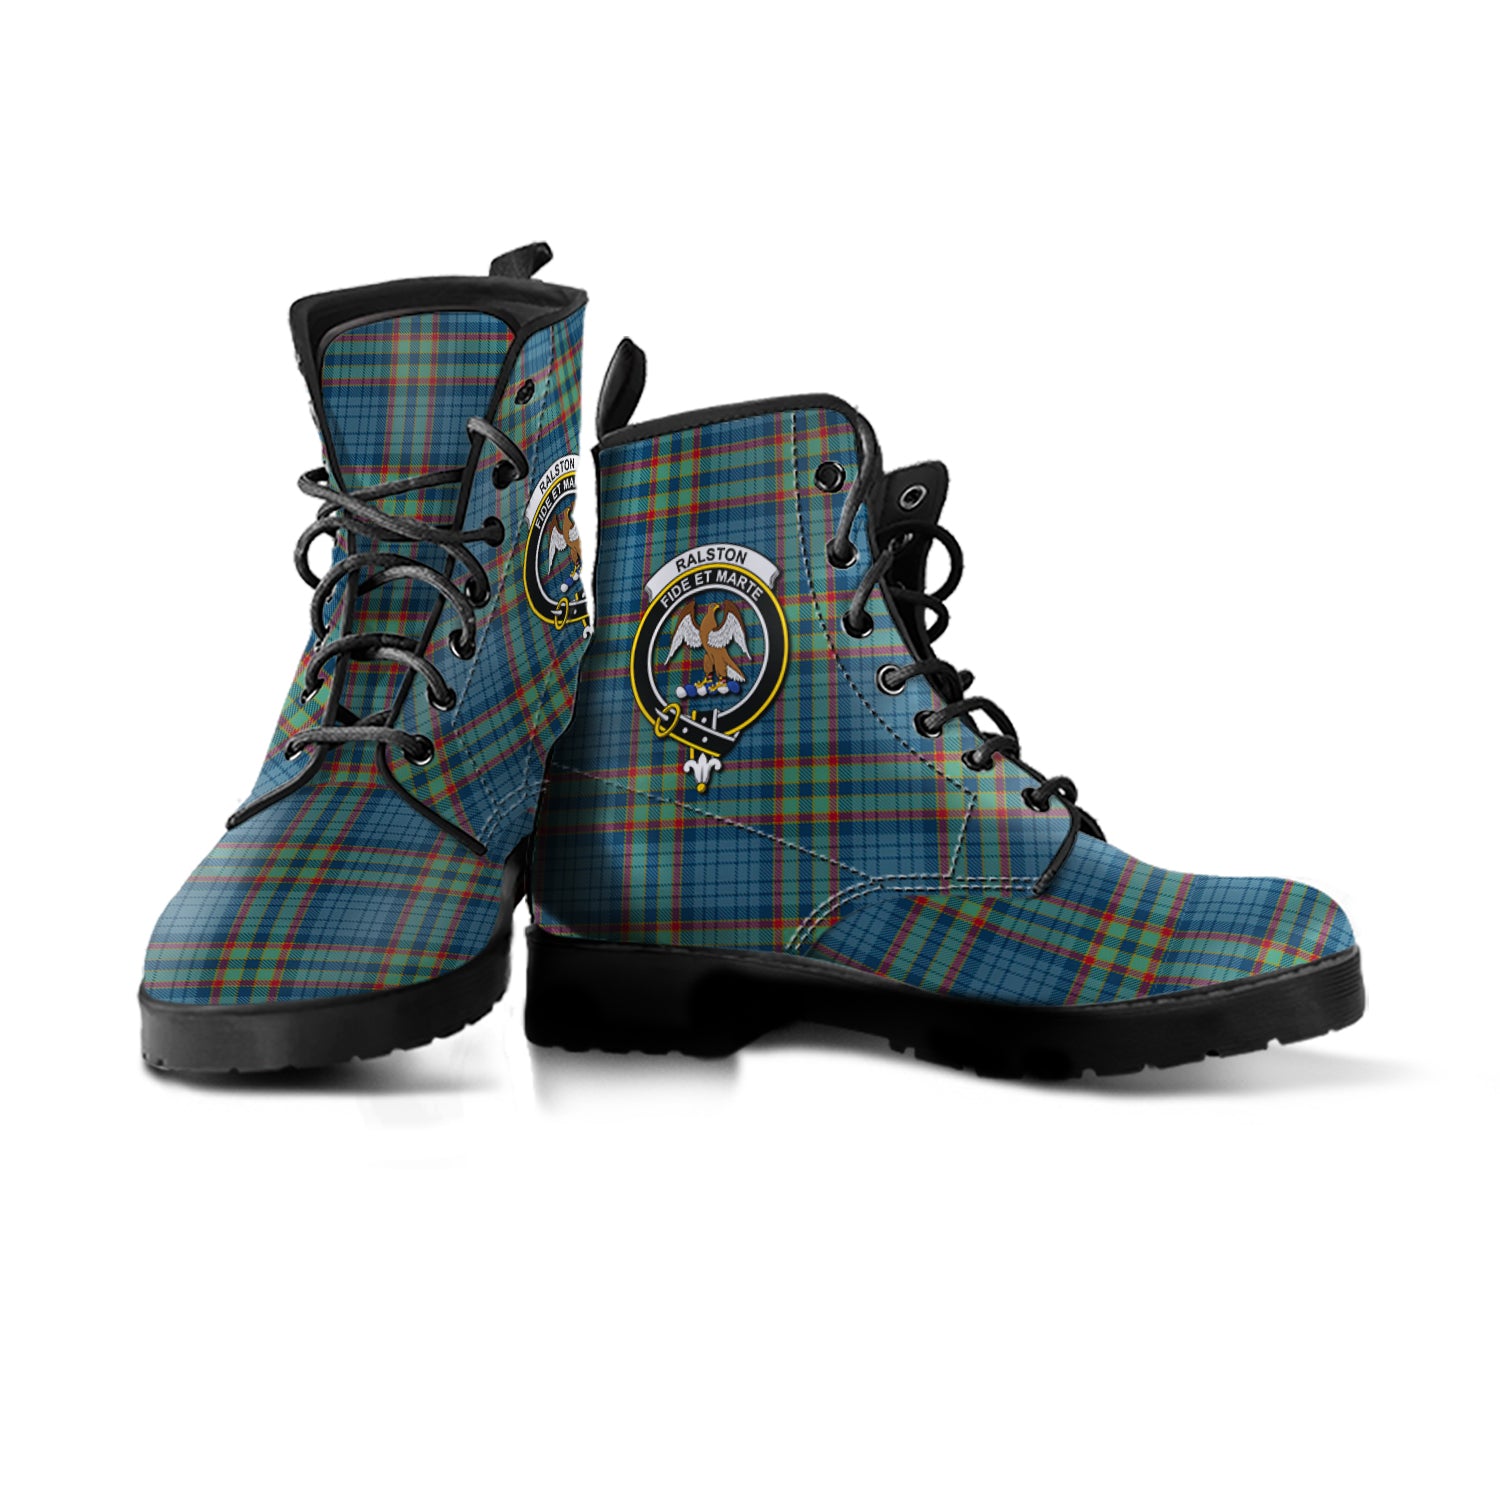 scottish-ralston-uk-clan-crest-tartan-leather-boots